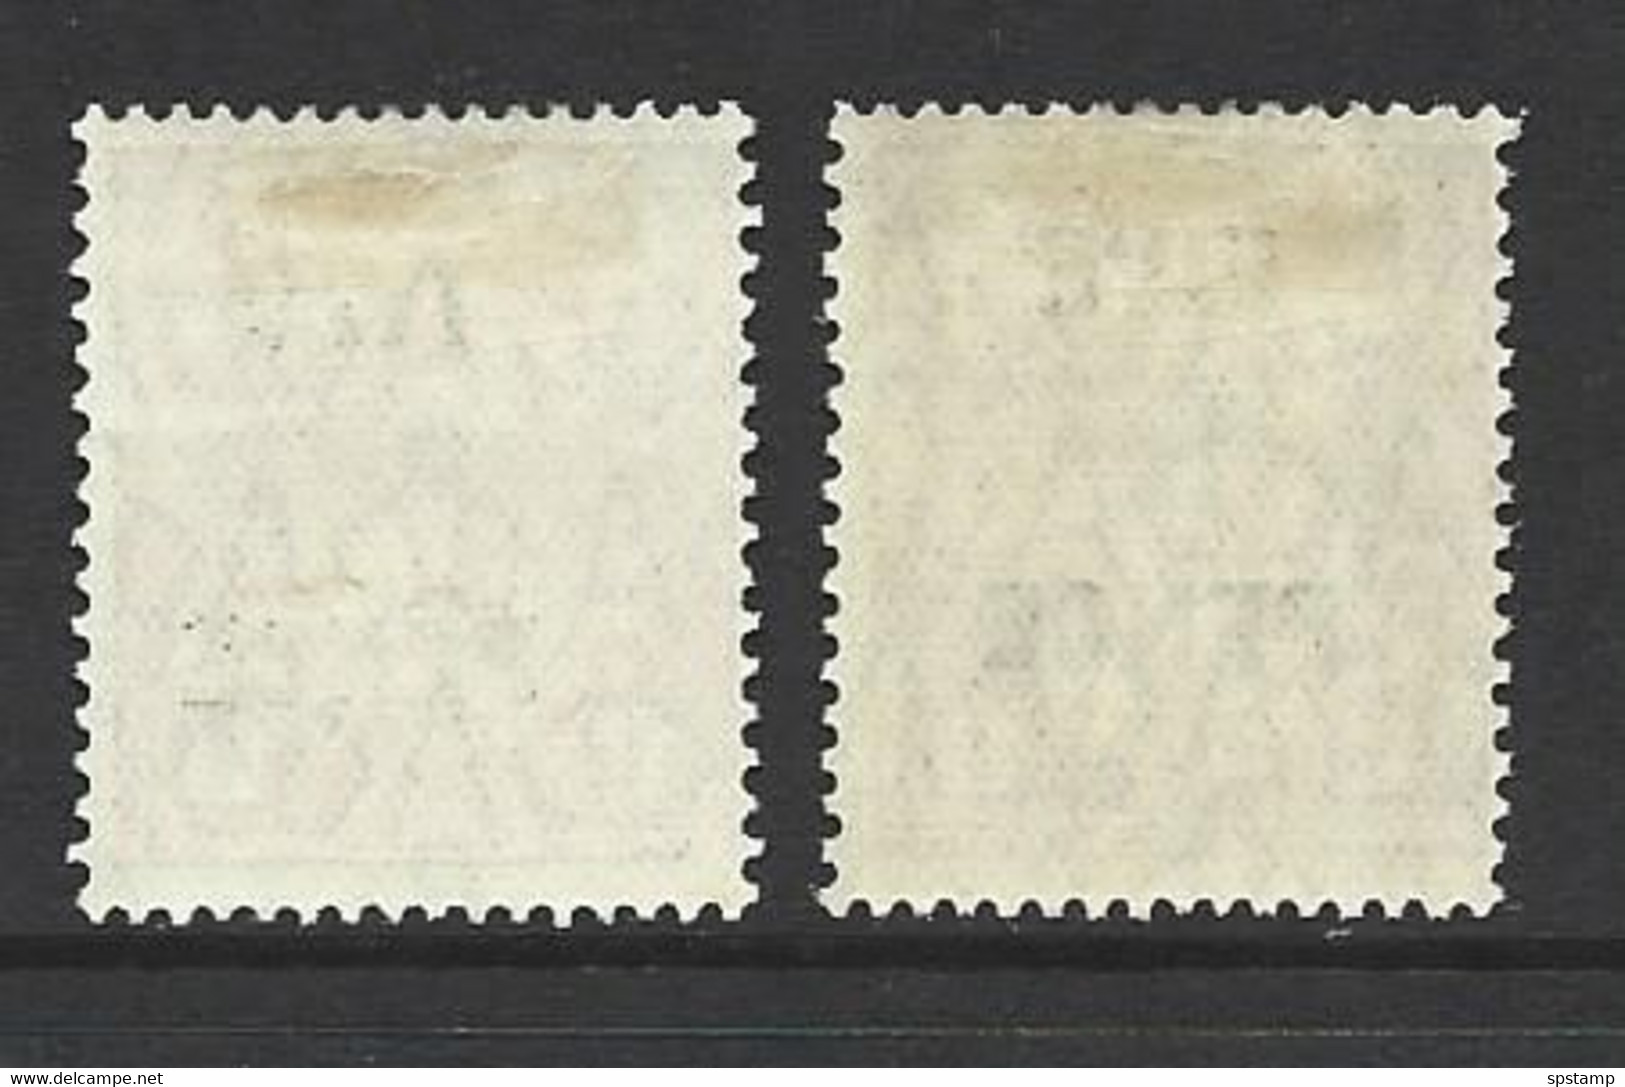 Australia 1930 Surcharges On KGV Set Of 2 FM , Clean HR - Mint Stamps